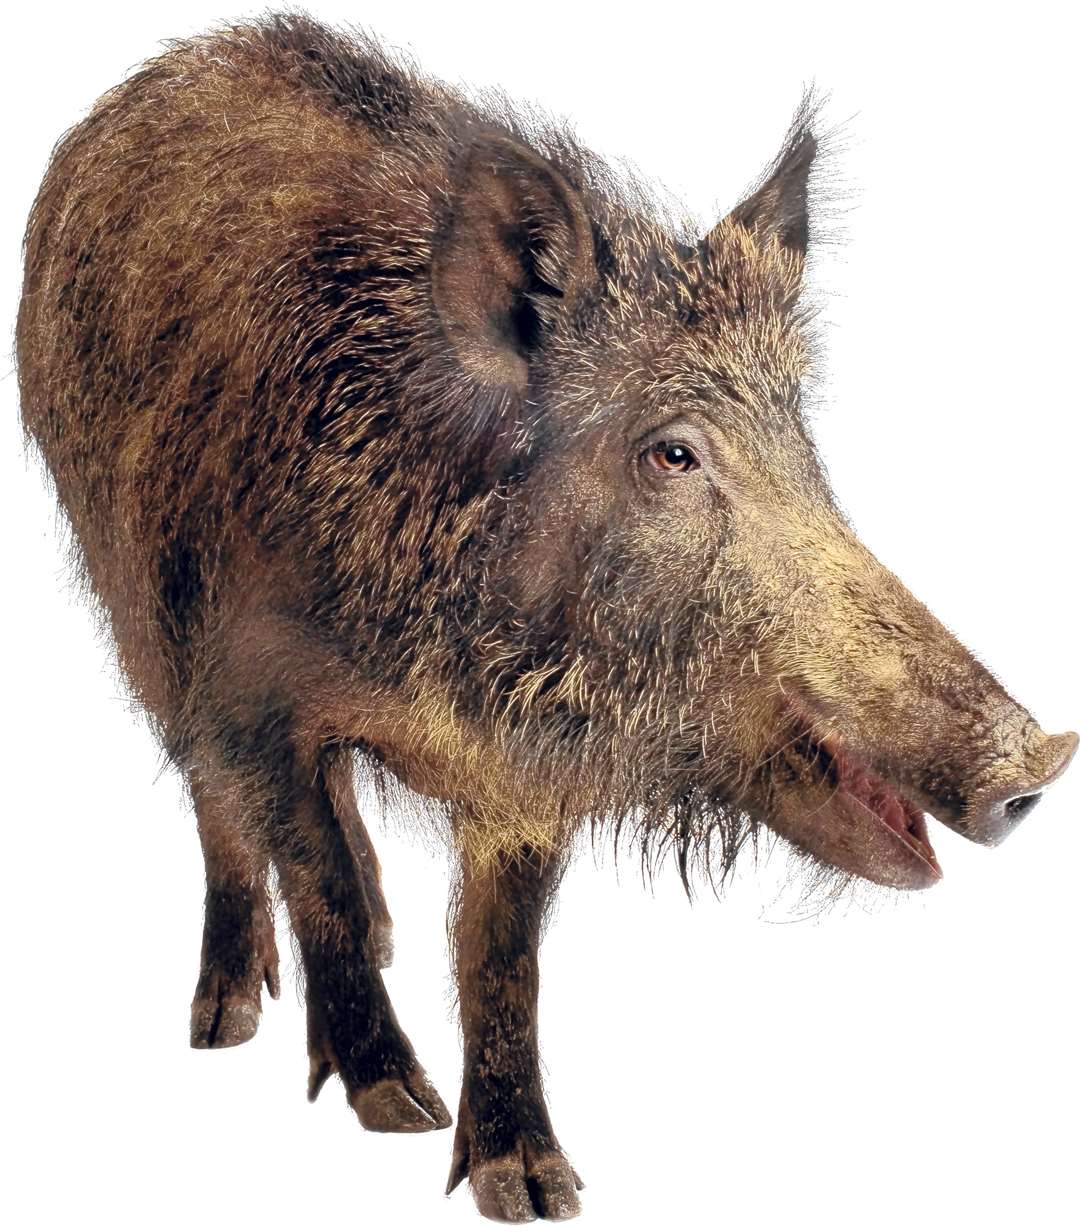 A wild boar picture courtesy of Thinkstock